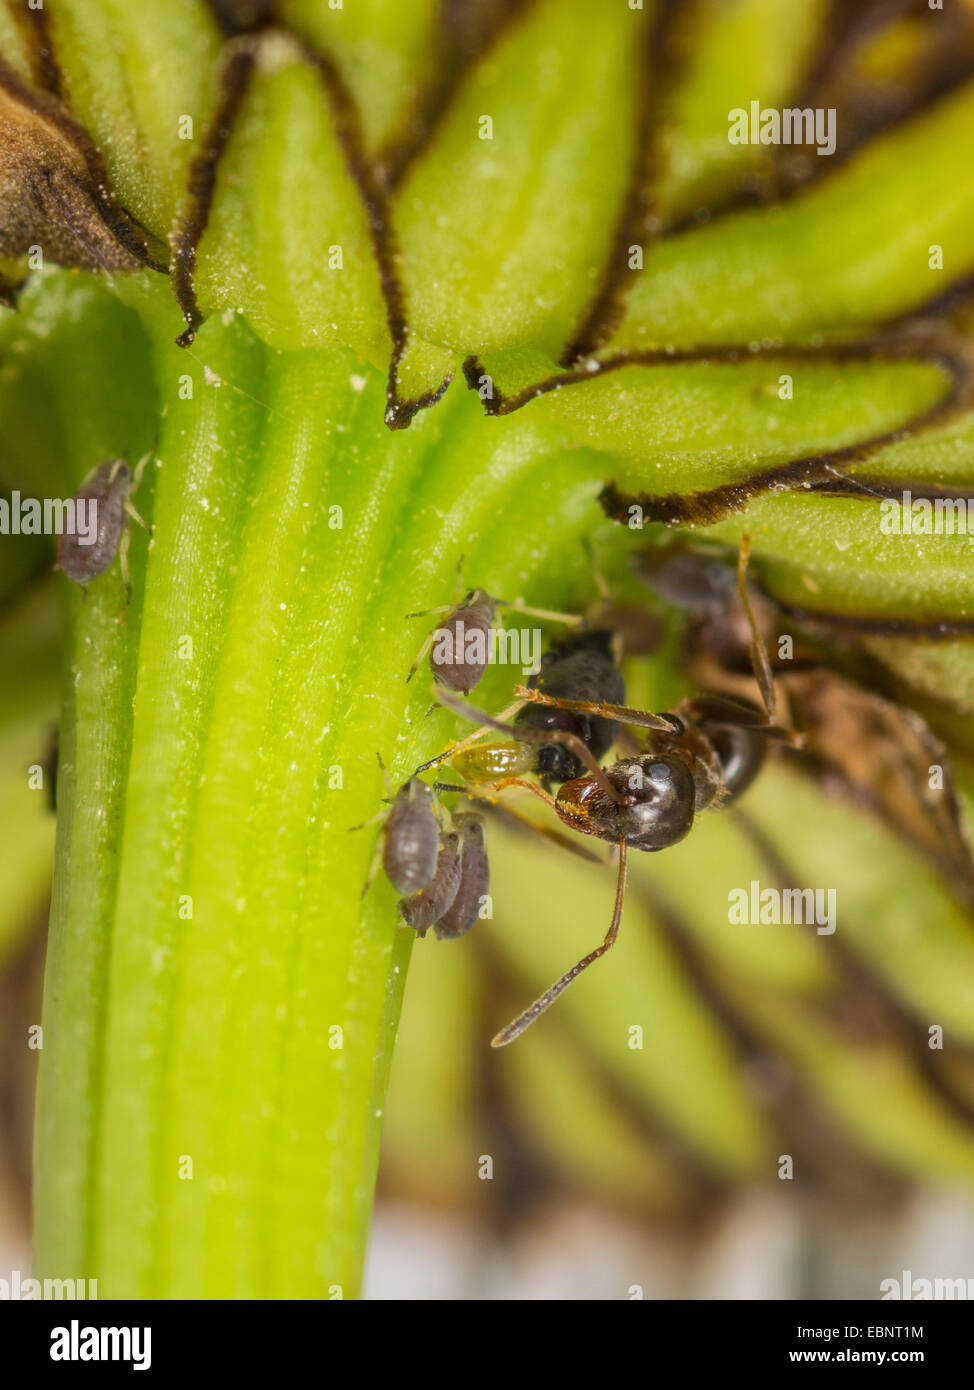 Ameisen (Lasius spec.), Ameise melkt saugen Blattläuse auf Ochsen-Auge Gänseblümchen, Deutschland Stockfoto